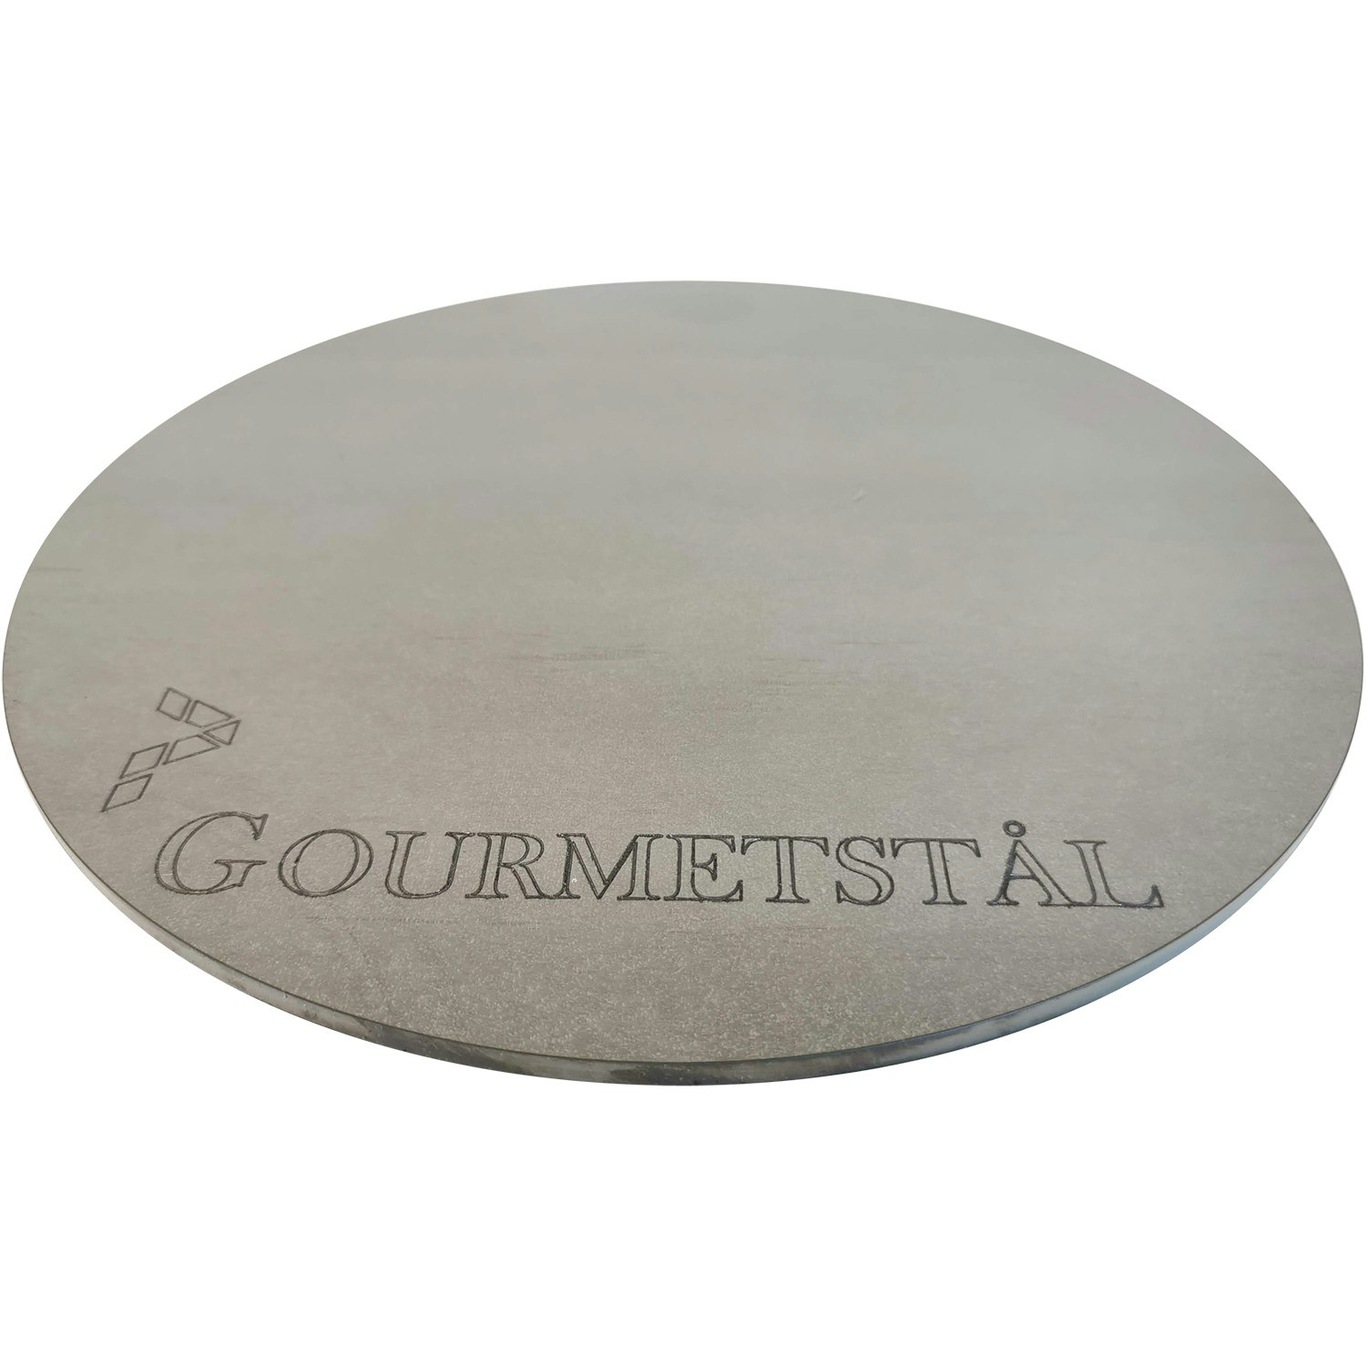 https://royaldesign.com/image/2/gourmetstal-steel-griddle-round-4?w=800&quality=80